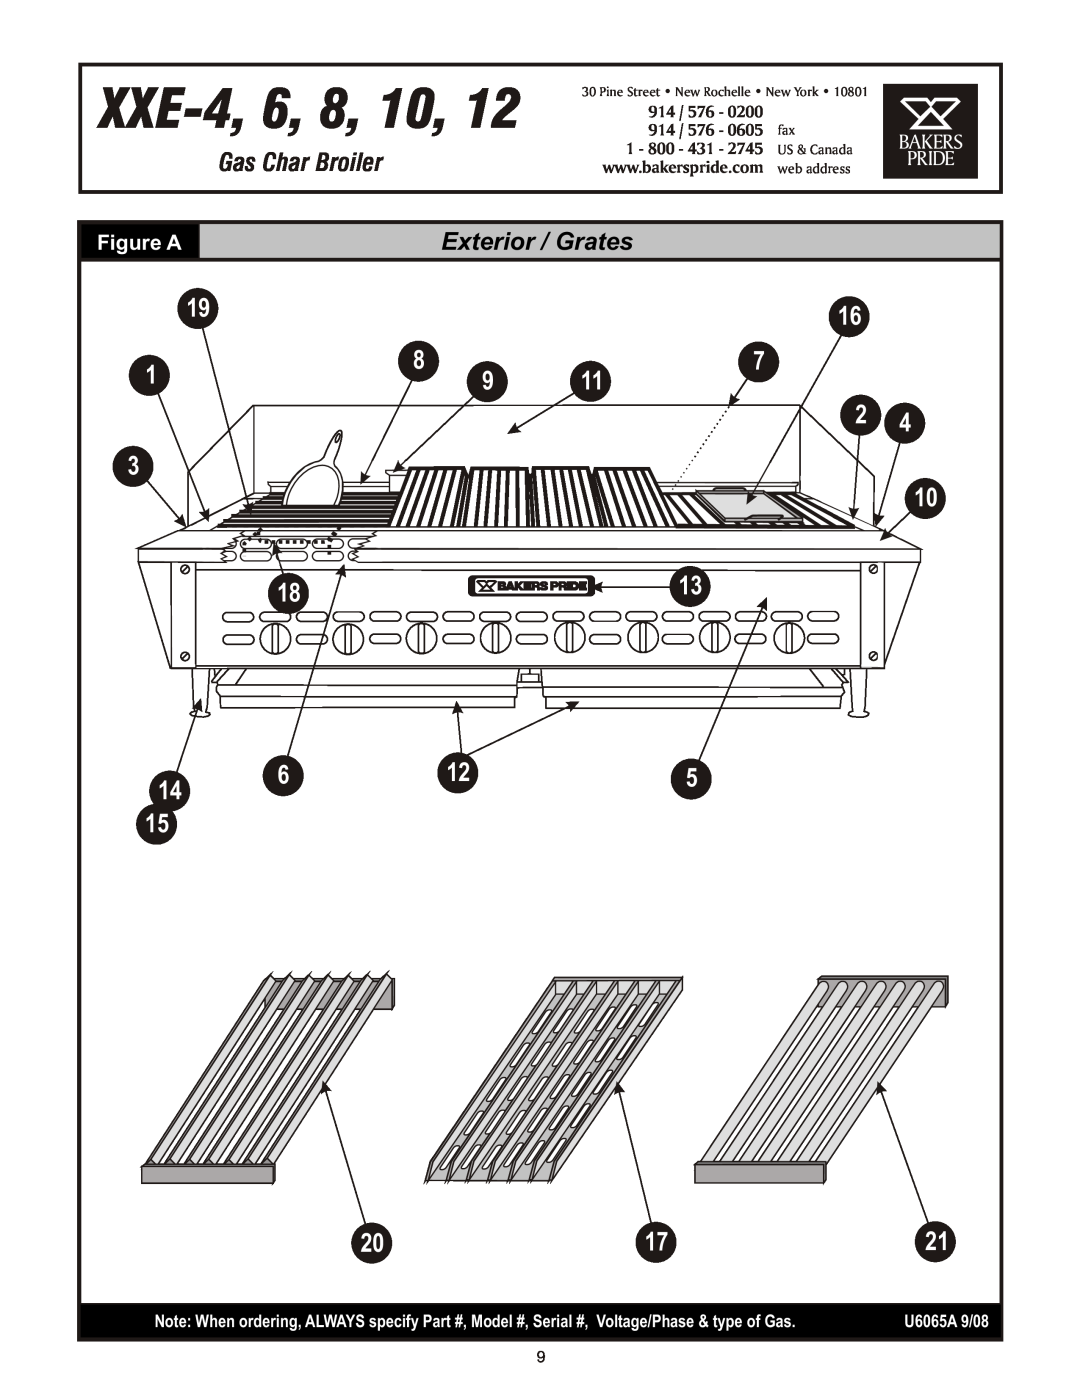 Bakers Pride Oven manual Figure A, XXE-4,6, 2 3 10, Exterior / Grates 